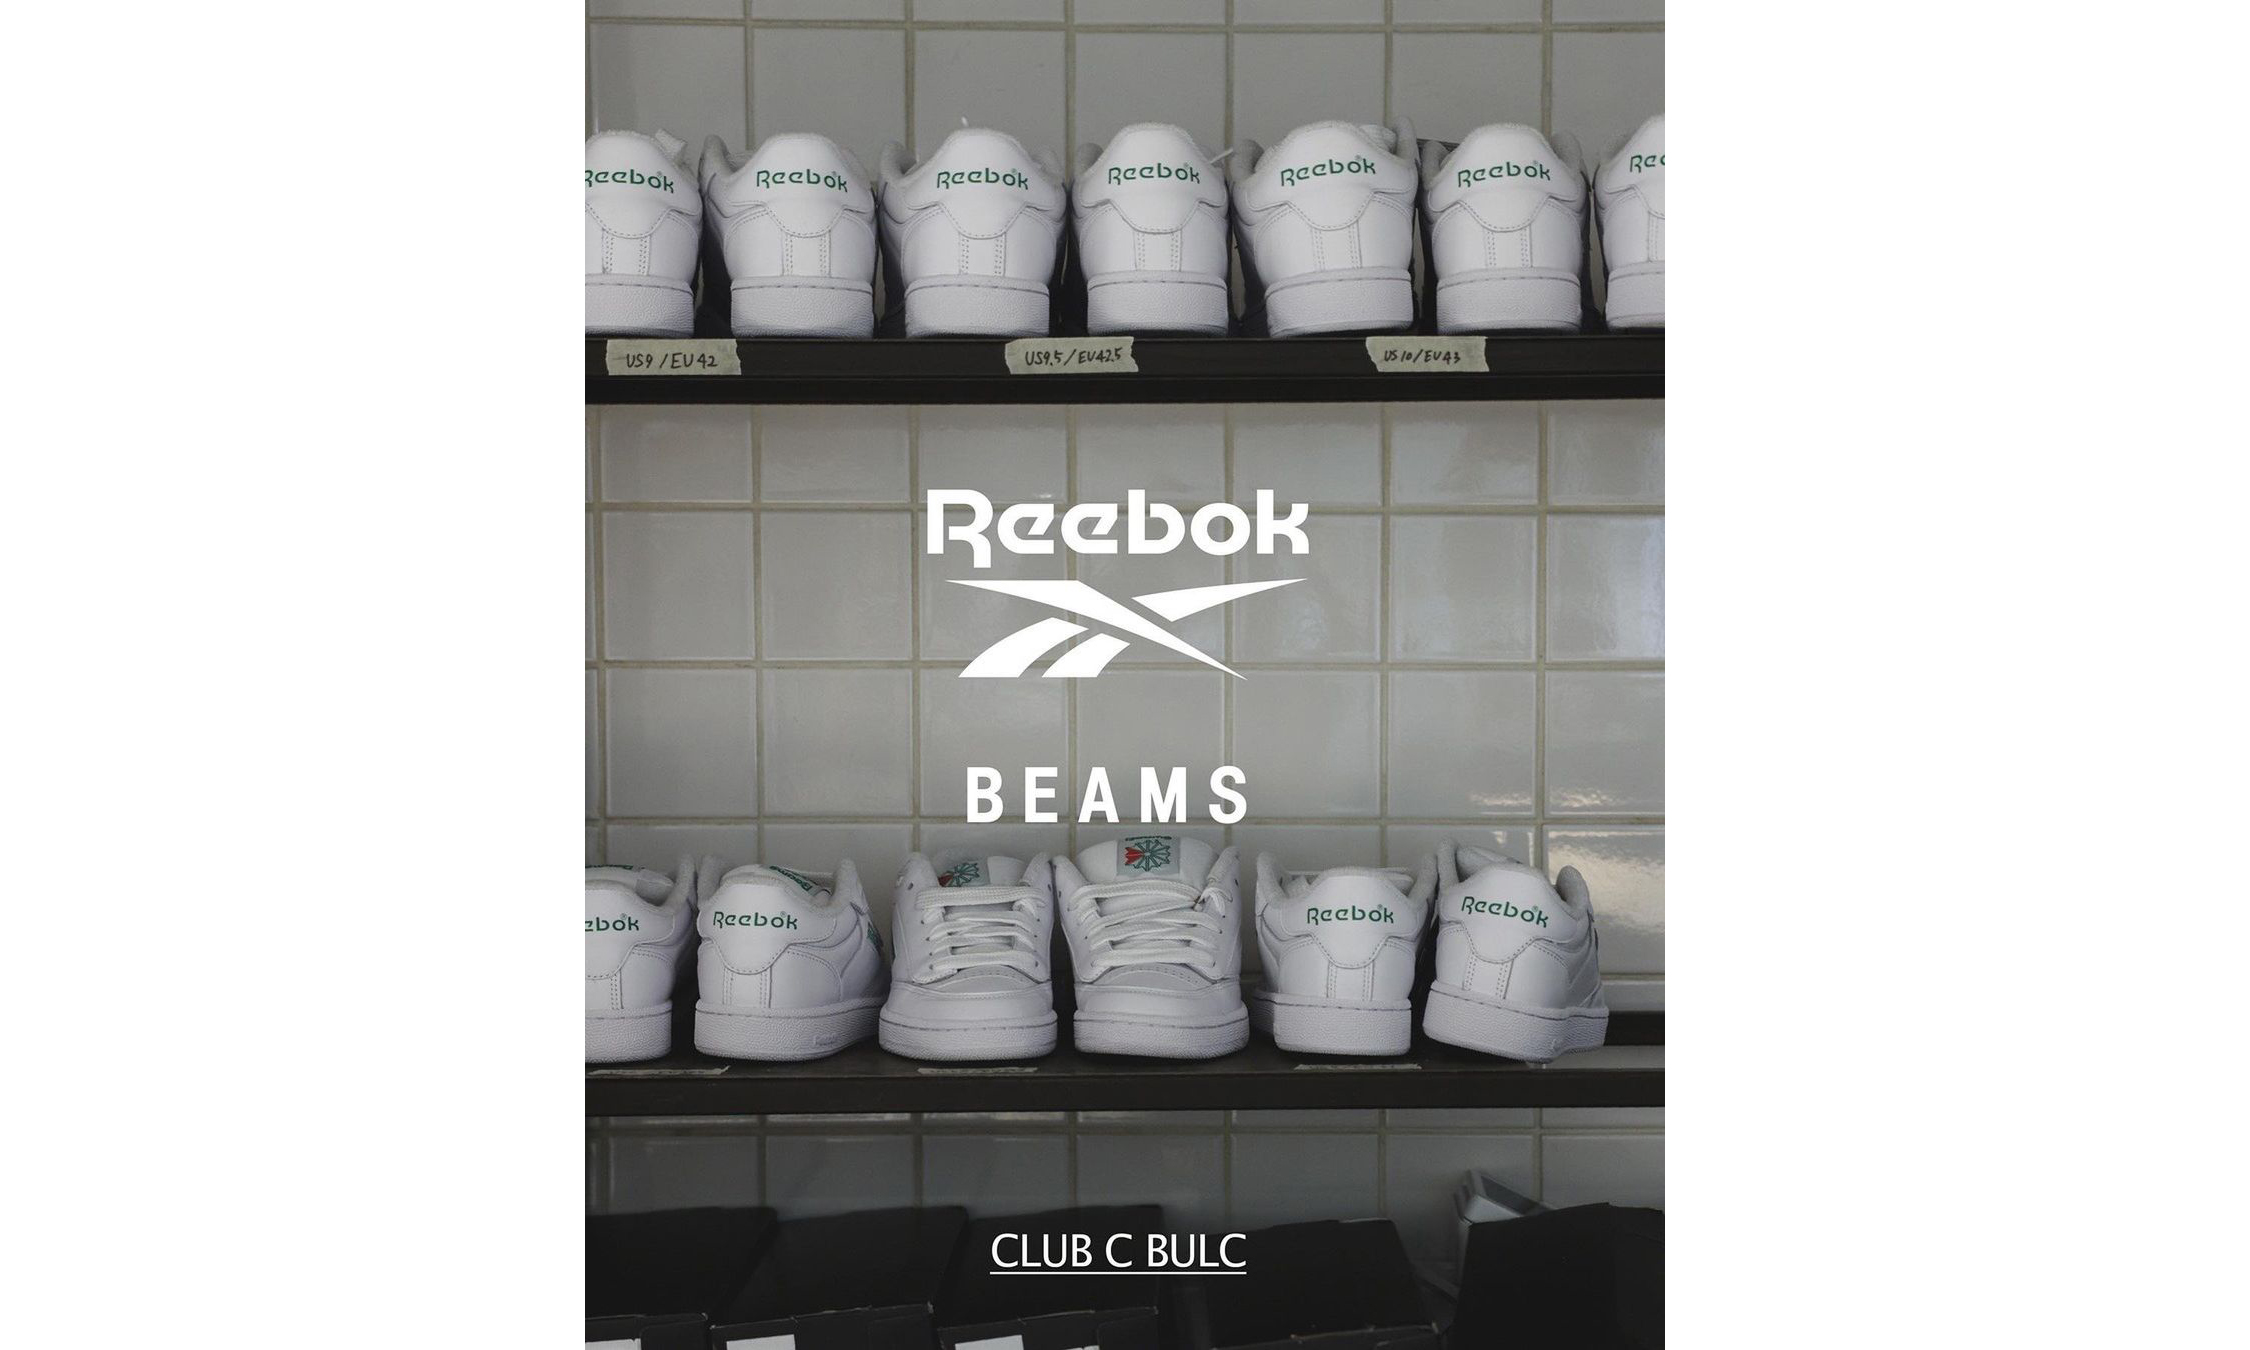 BEAMS x Reebok CLUB C BULC 联名释出